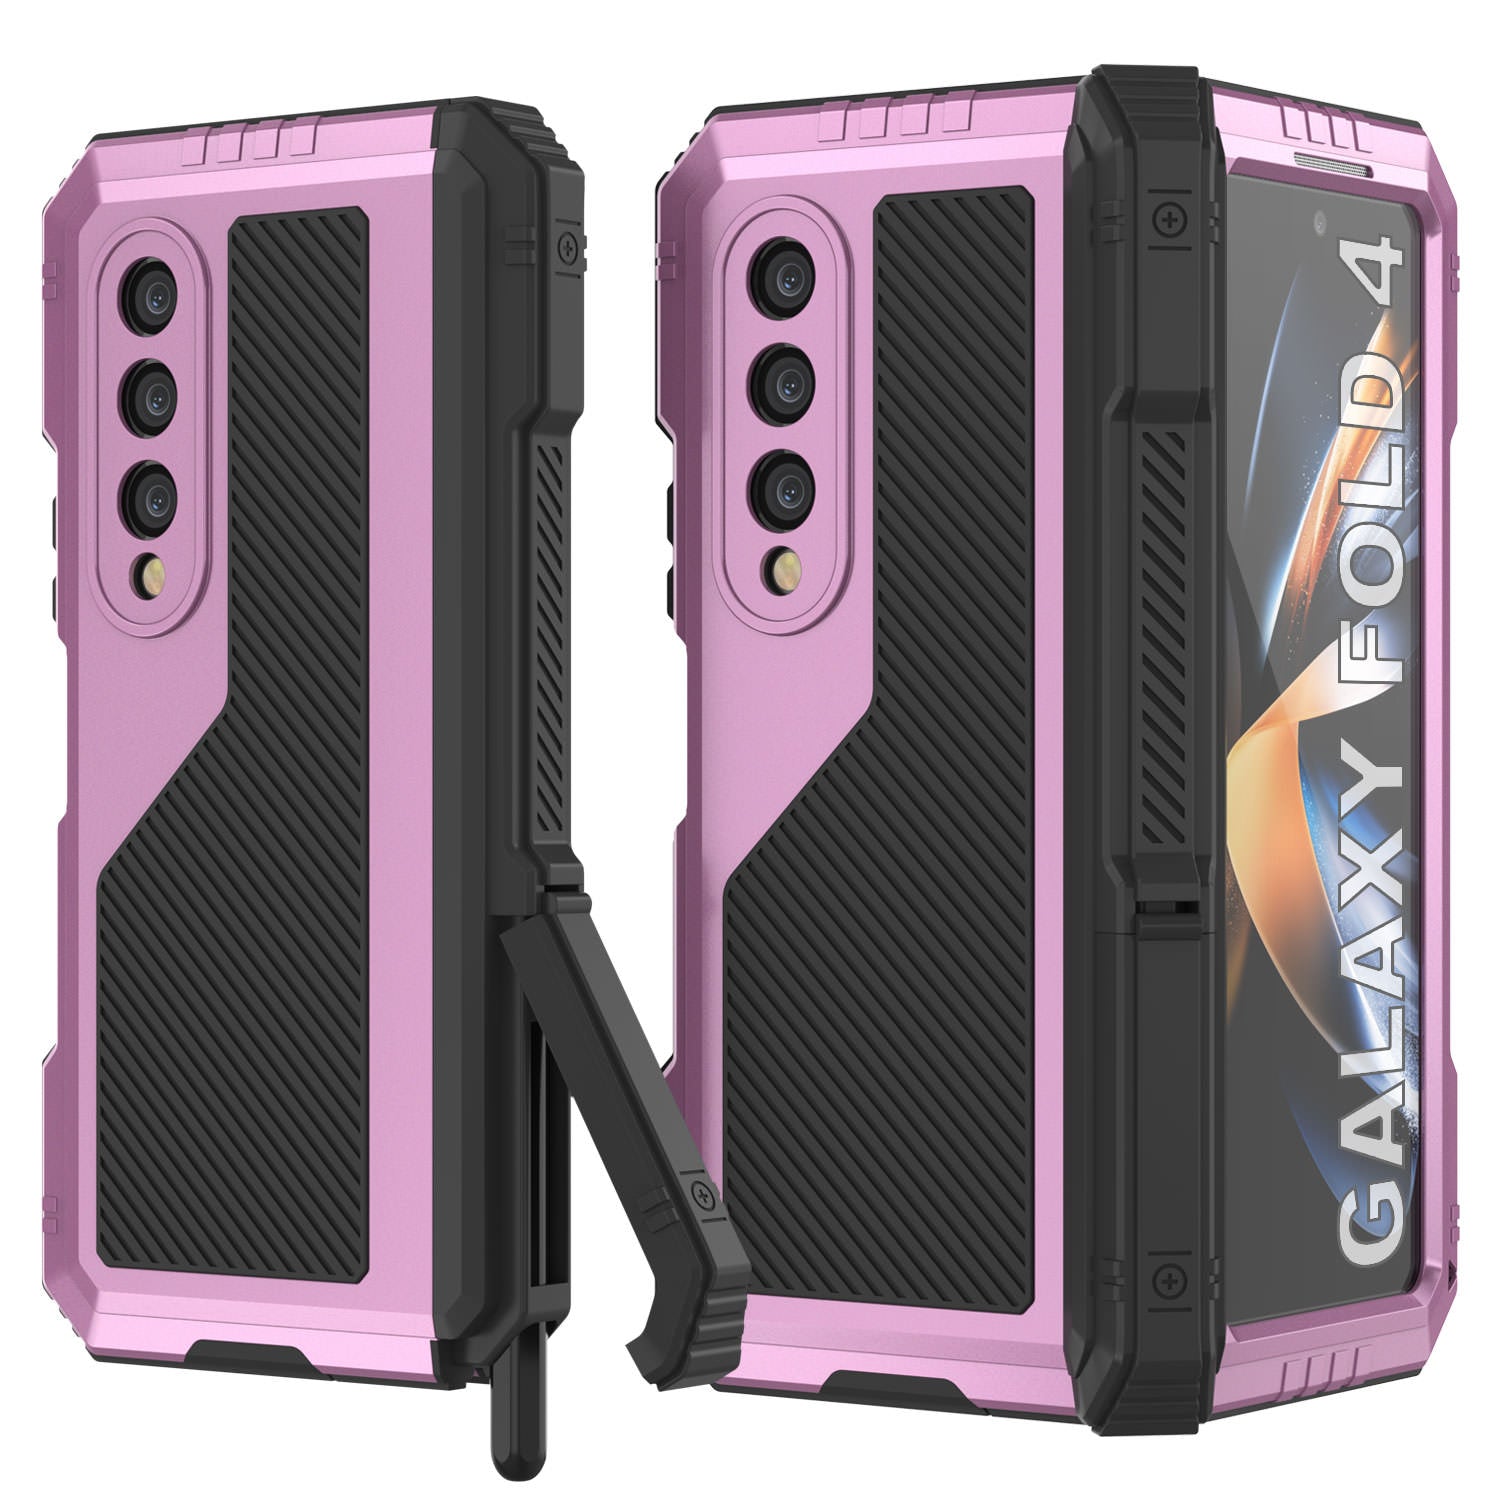 Galaxy Z Fold4 Metal Case, Heavy Duty Military Grade Armor Cover Full Body Hard [Pink]